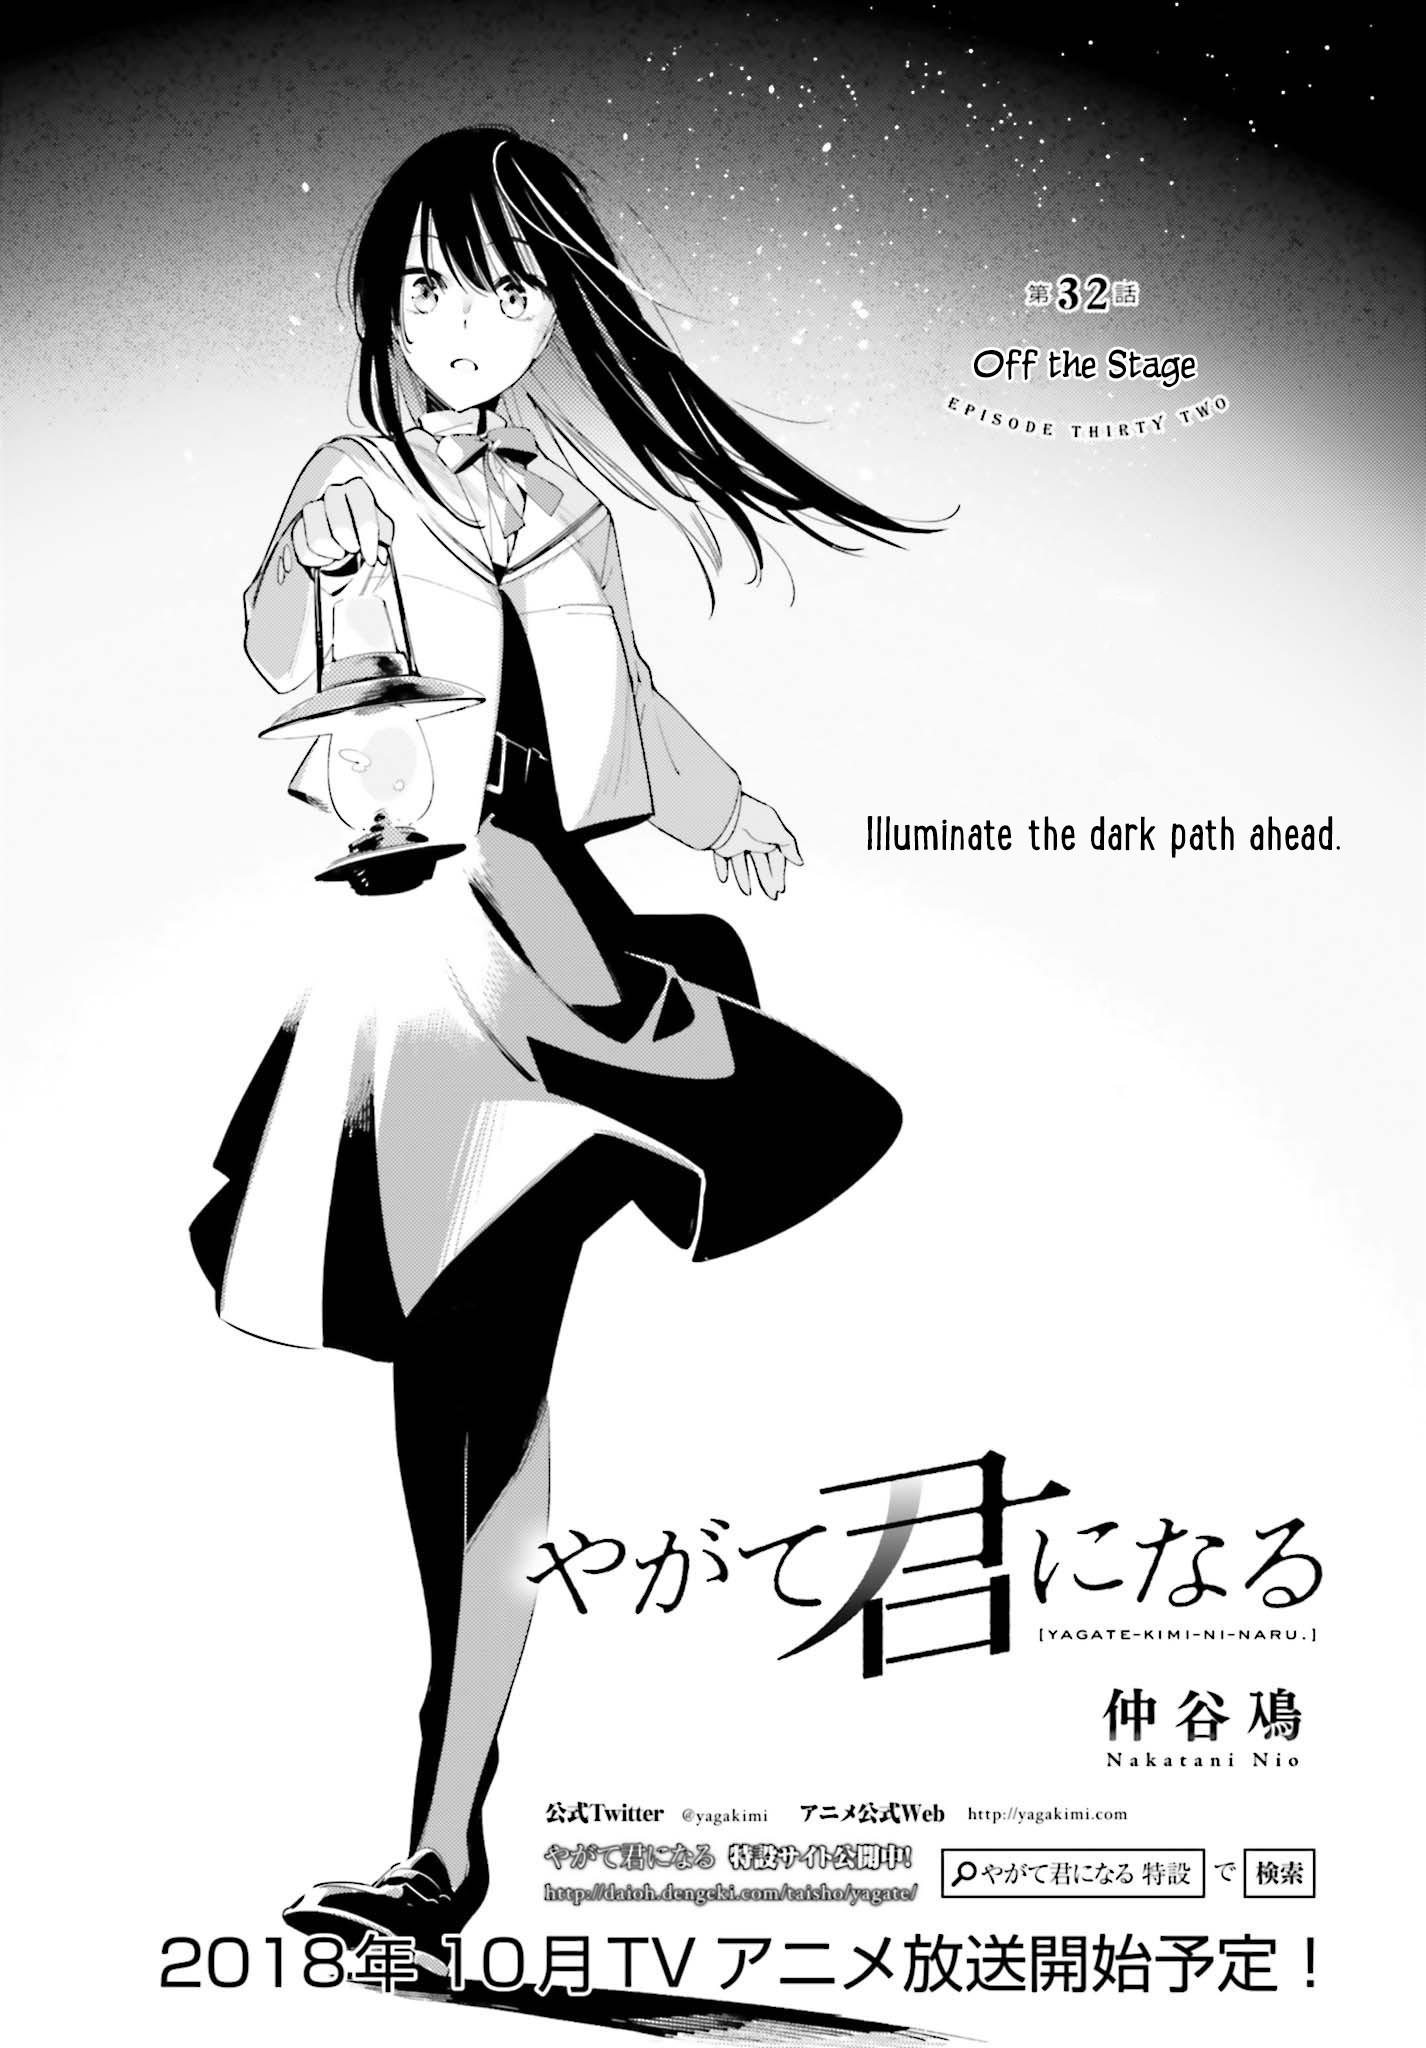 Read Yagate Kimi Ni Naru Vol.2 Chapter 8 : Multiple Choice Question on  Mangakakalot